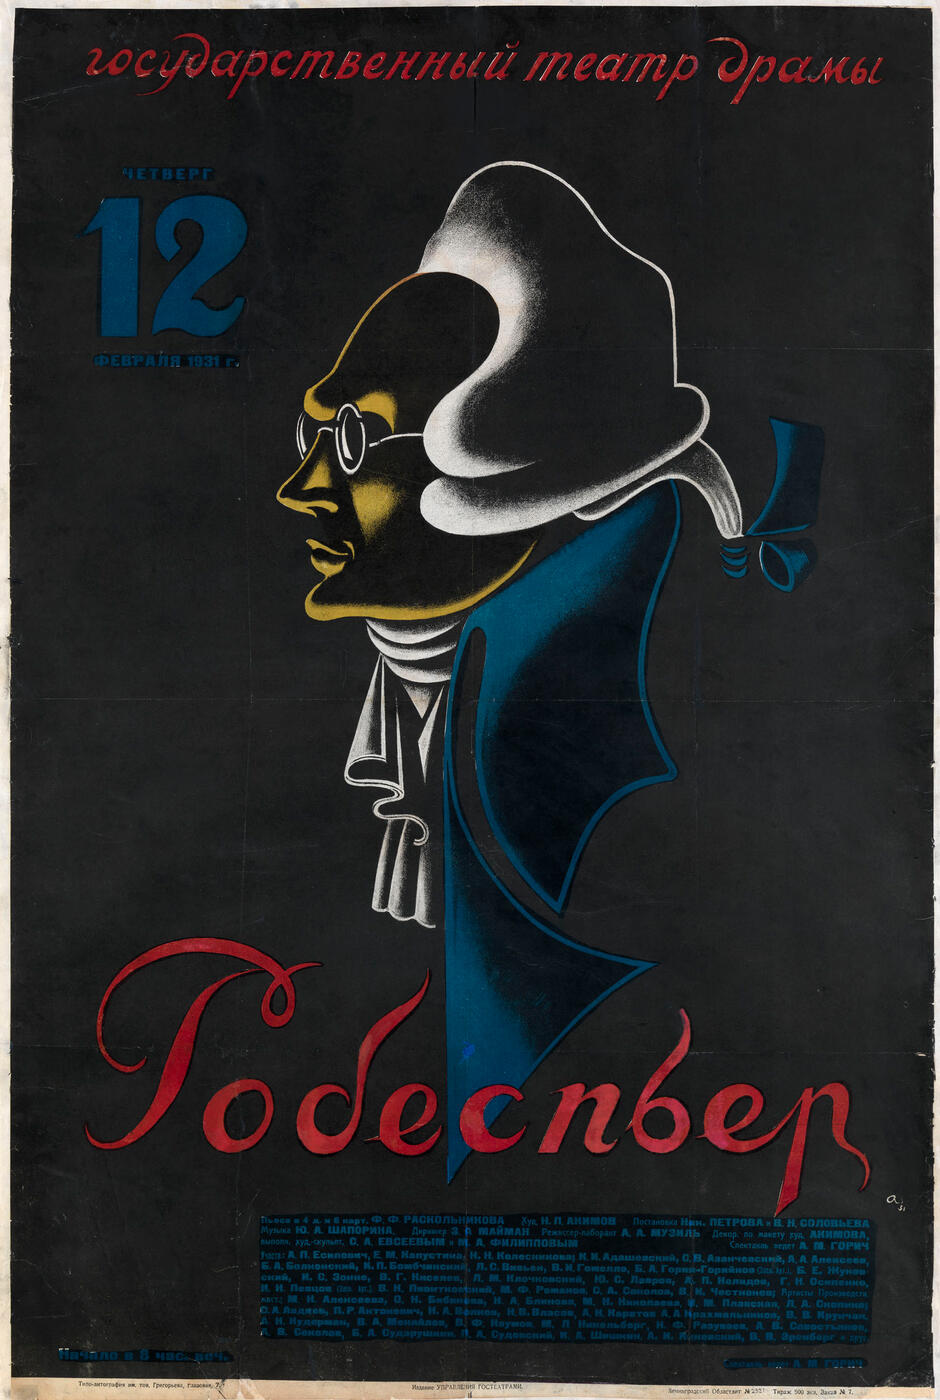 Poster for the F. Raskolnikov Play “Robespierre”, The State Drama Theatre